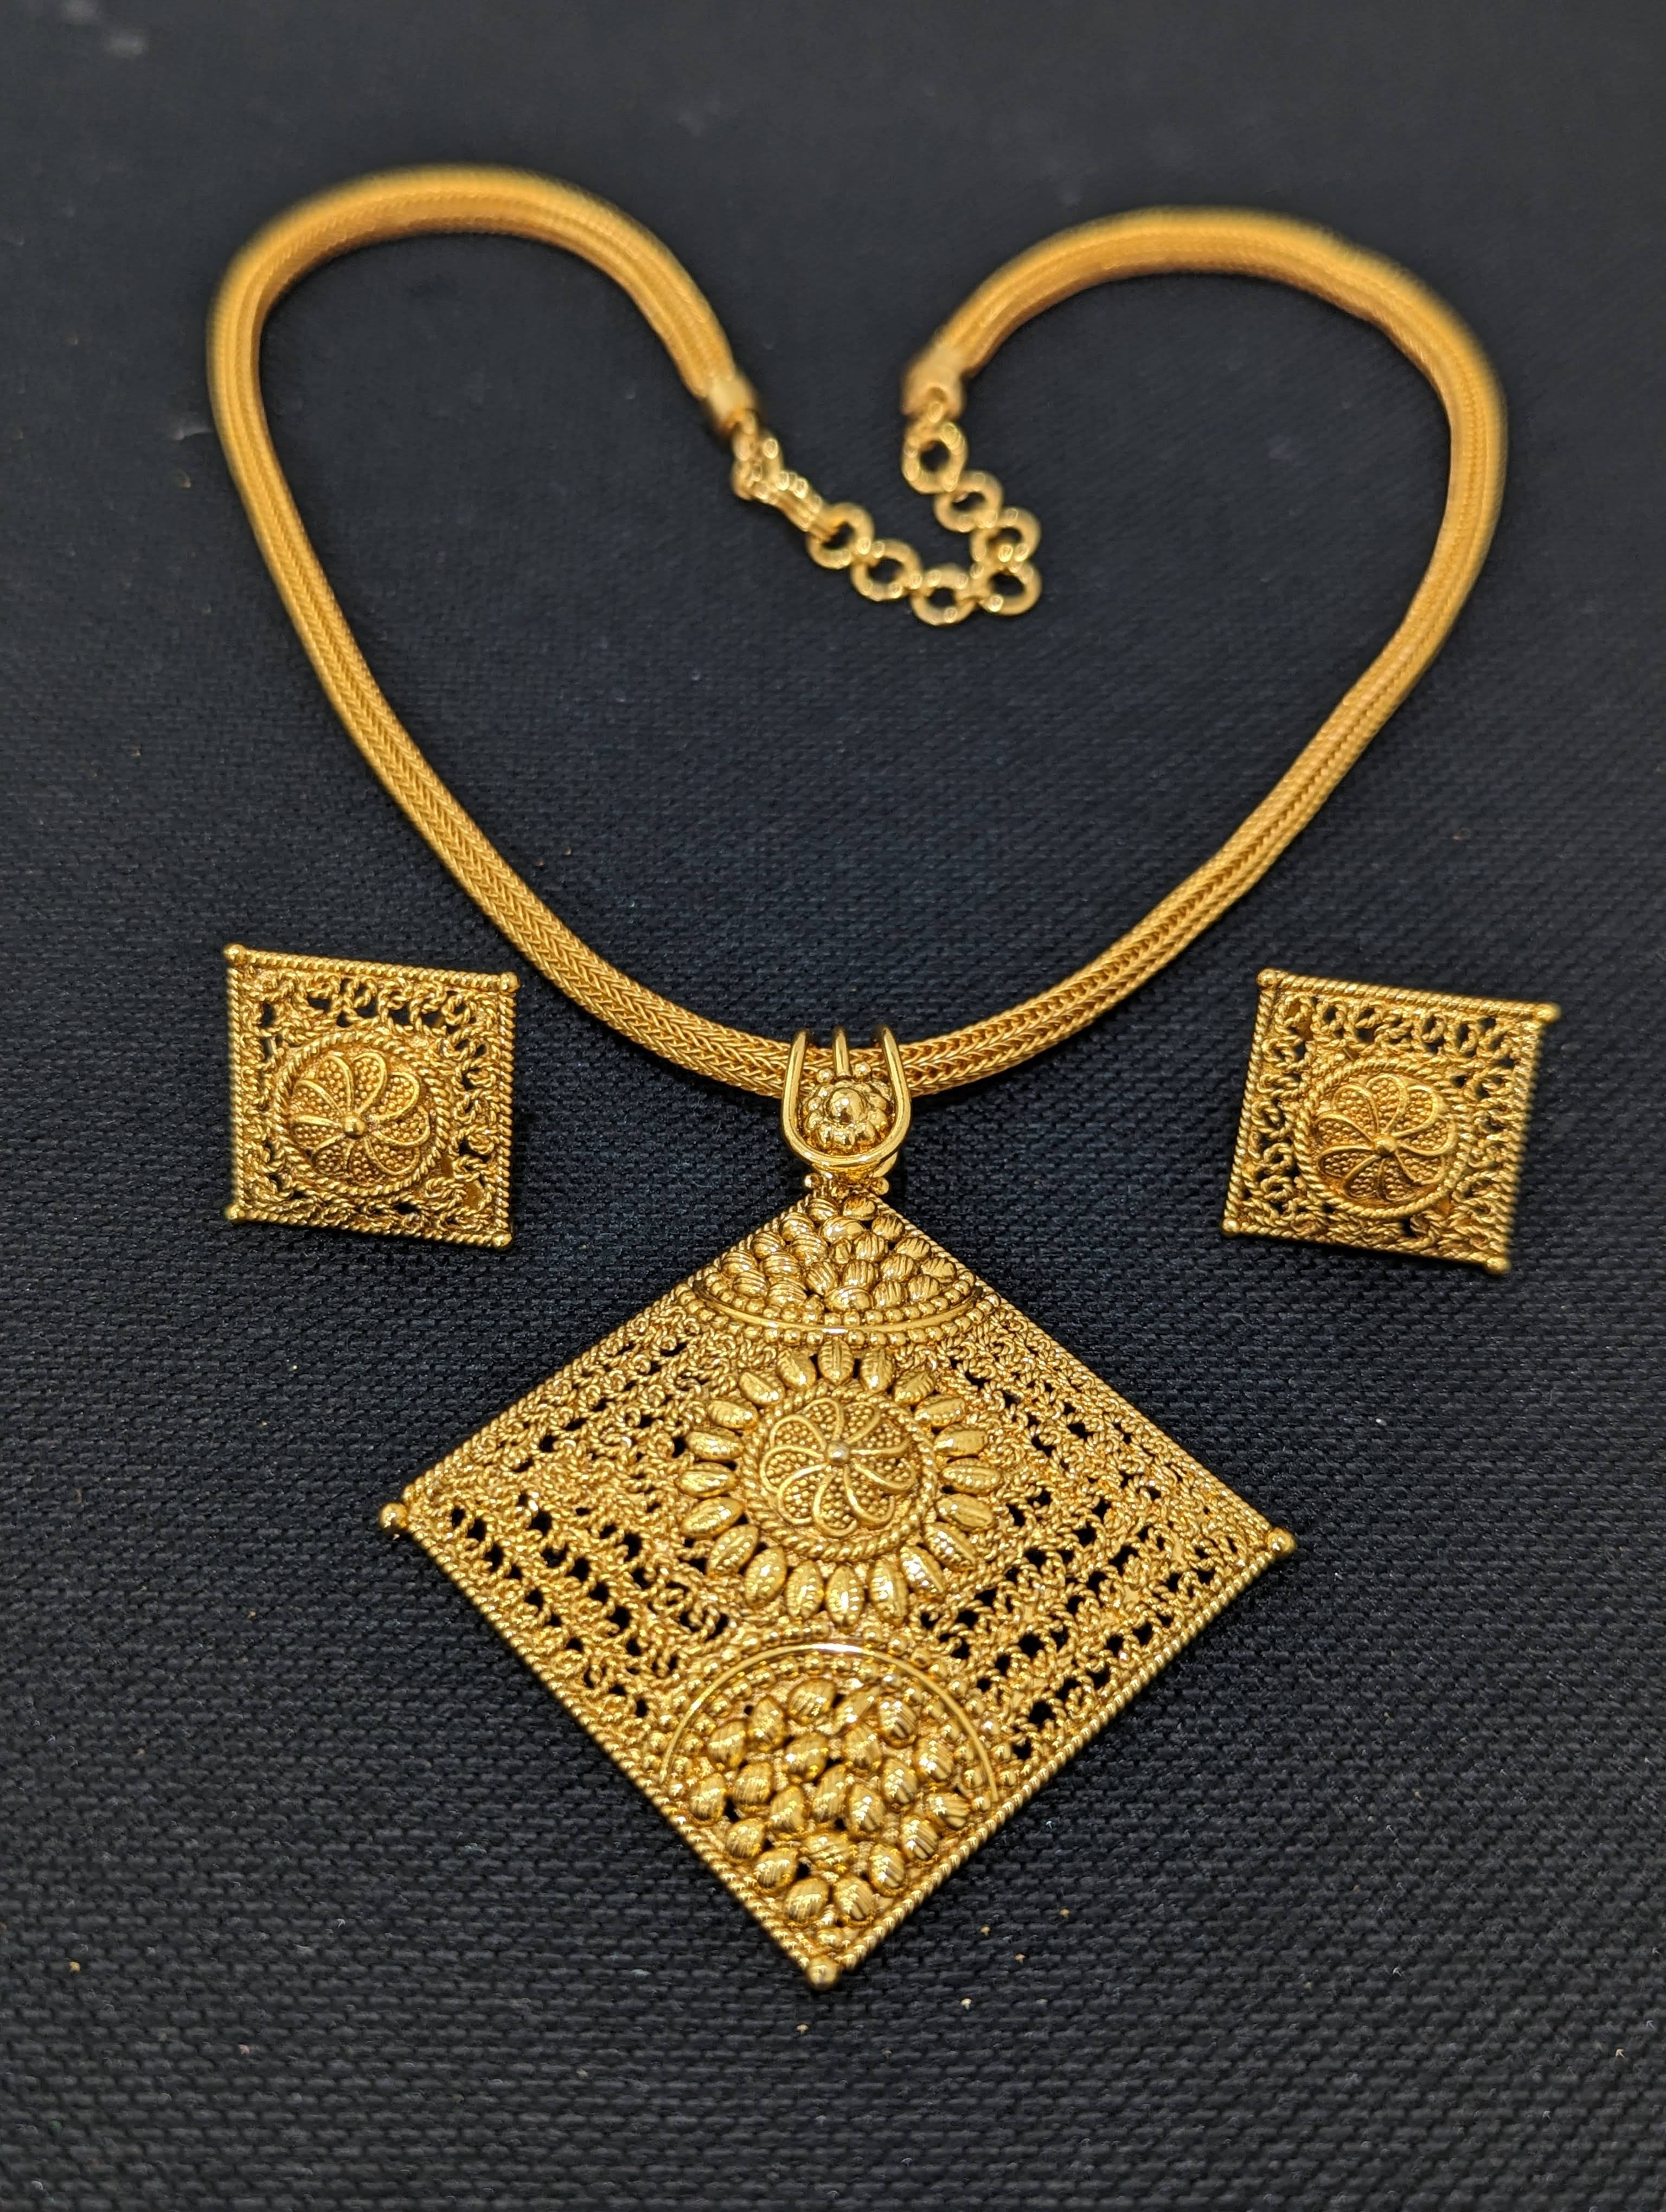 Gold look alike Pendant and Earrings Set - Design 2 – Simpliful Jewelry